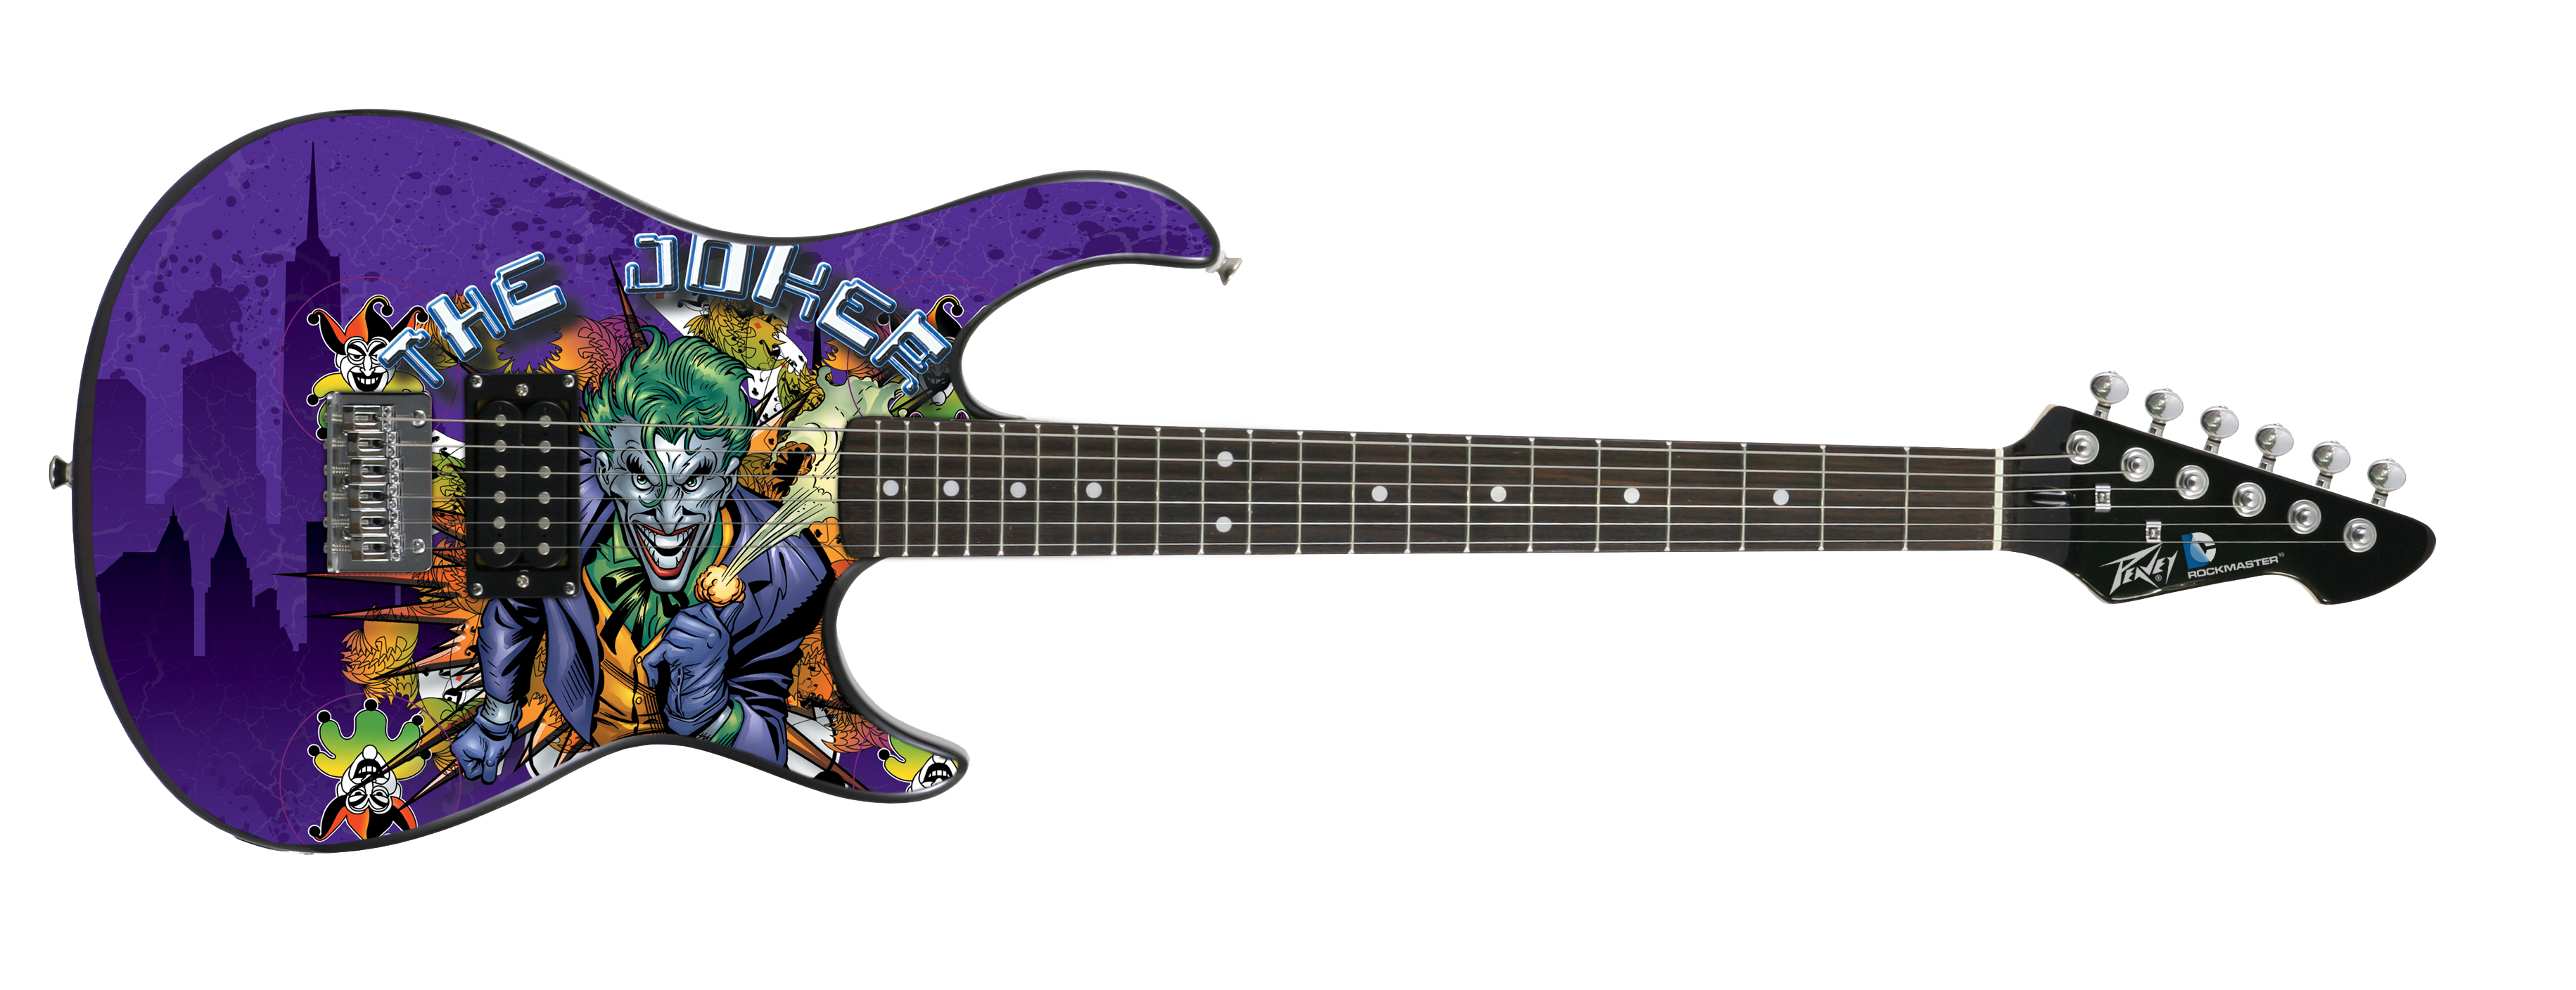 Peavey Rockmaster Joker Guitar